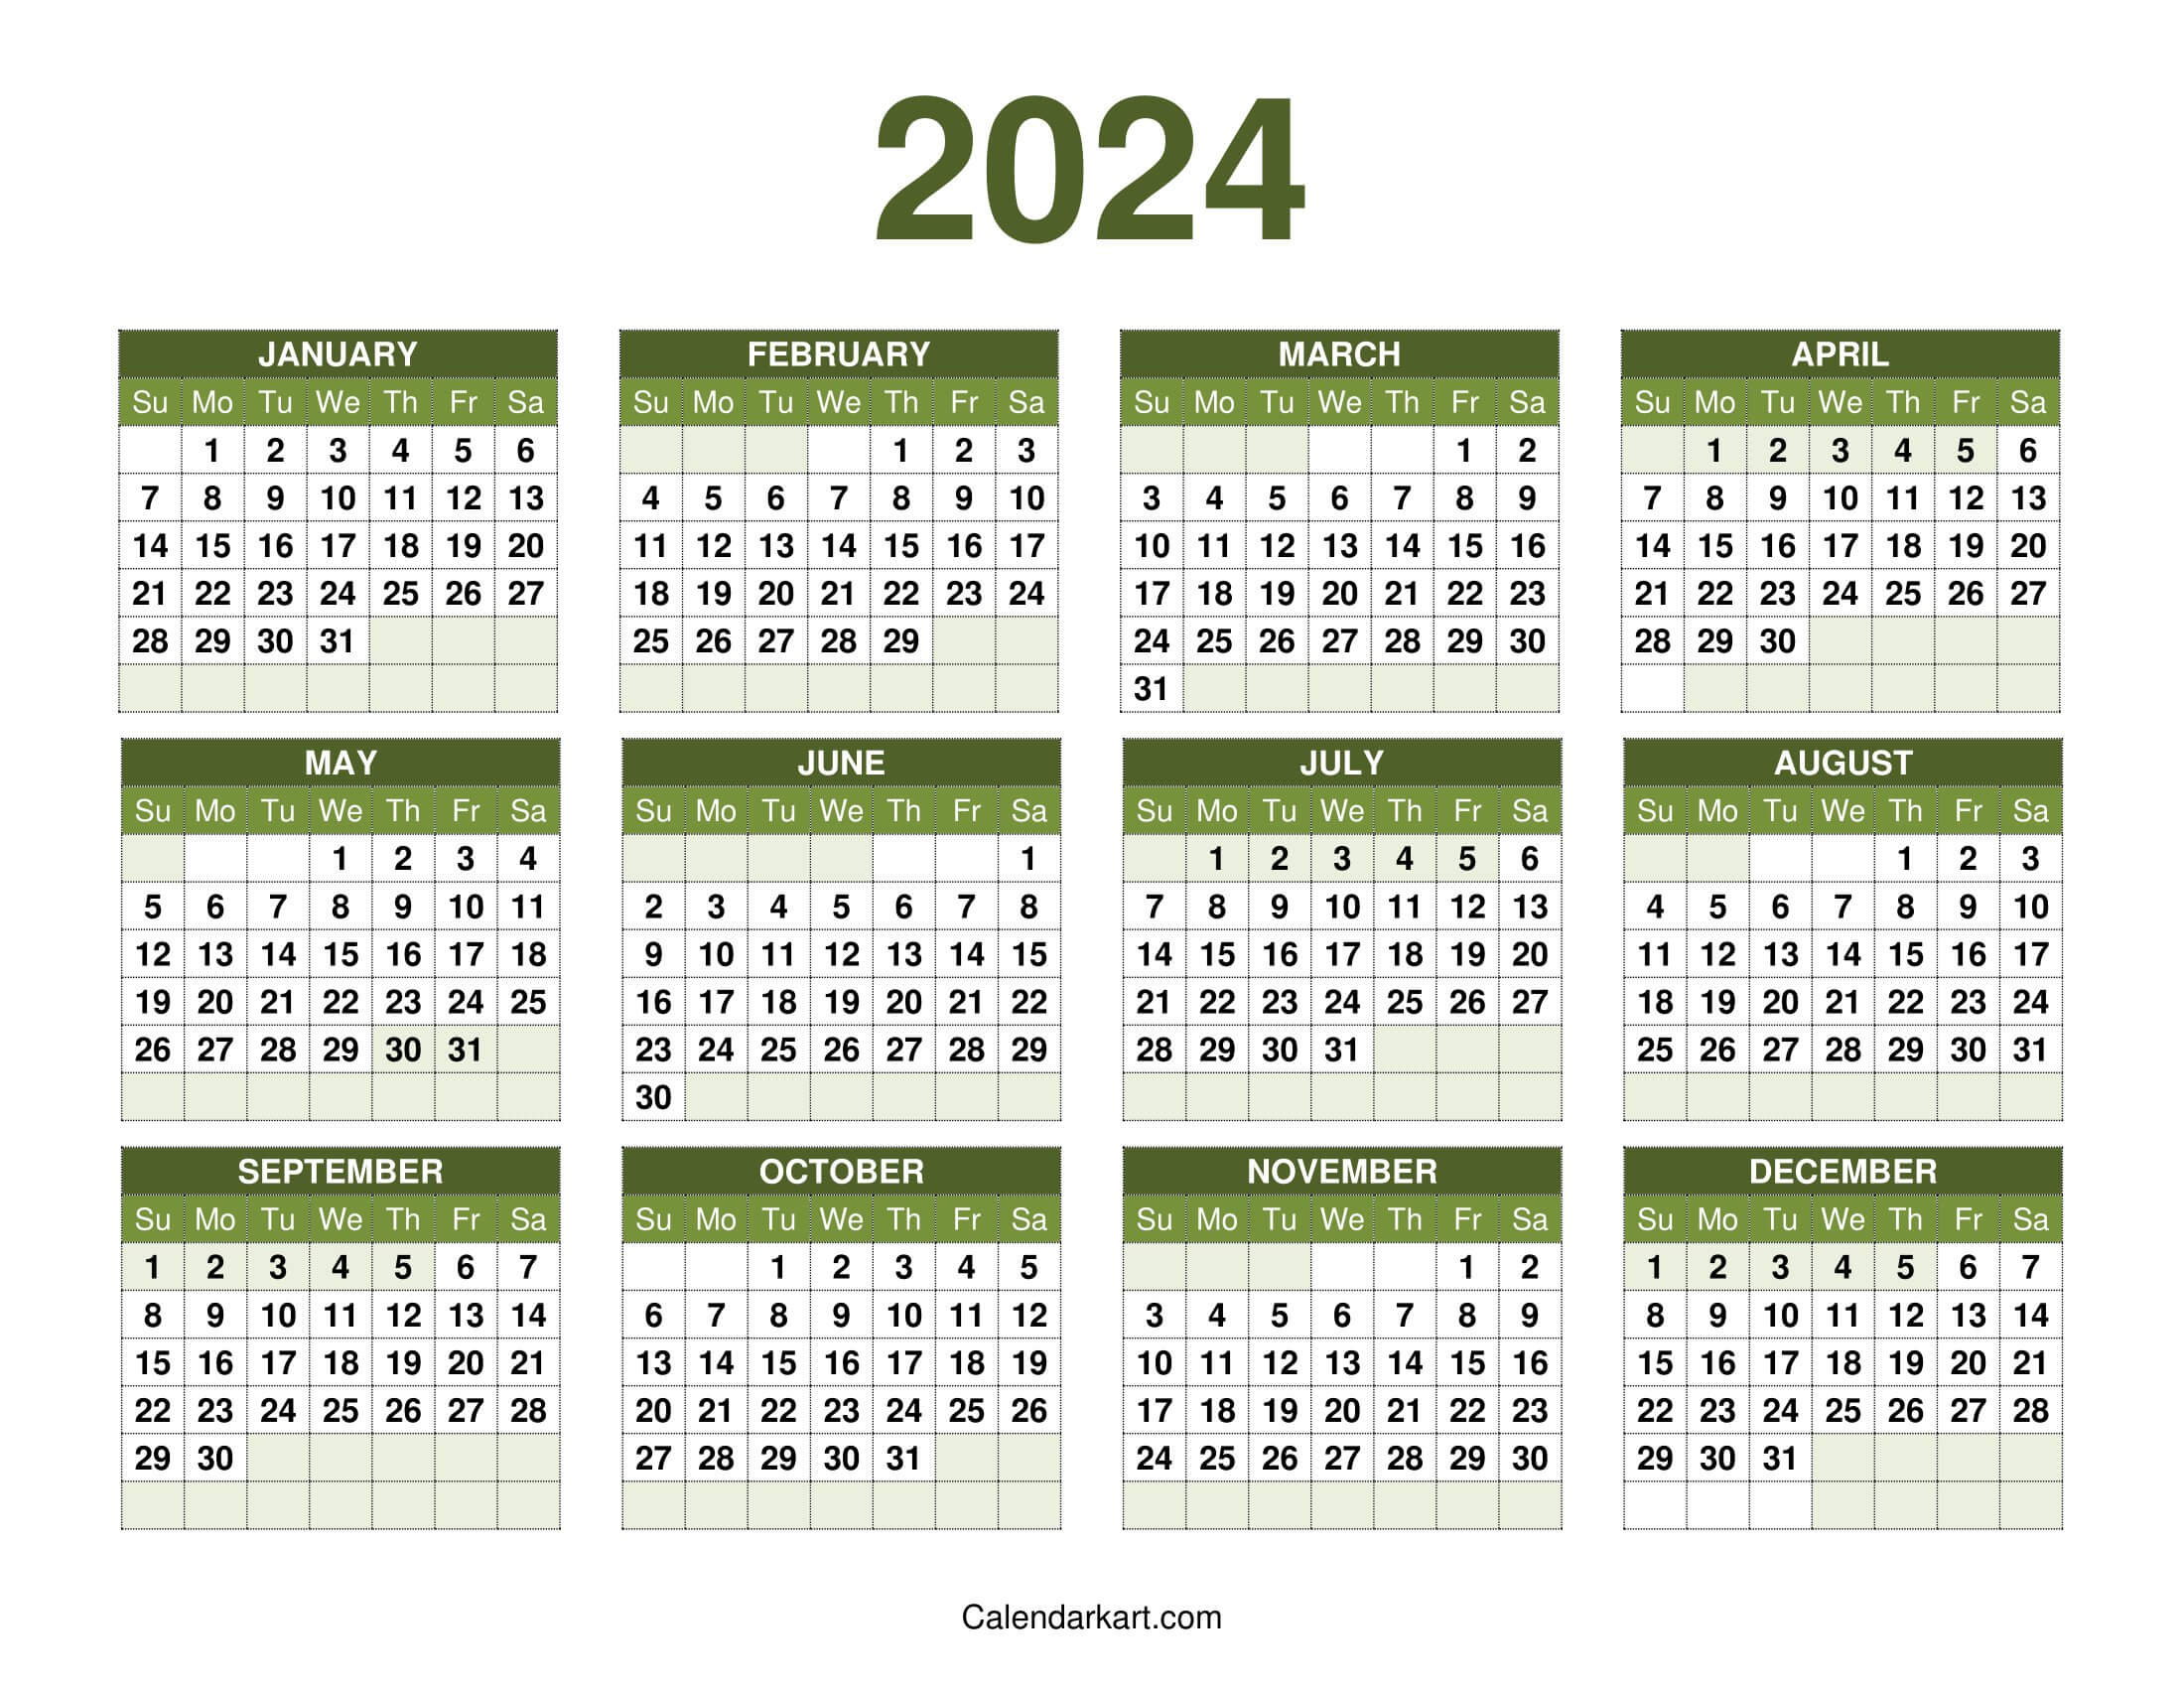 Free Printable Year At A Glance Calendar 2023-2024 - Calendarkart | Annual Calendar 2024